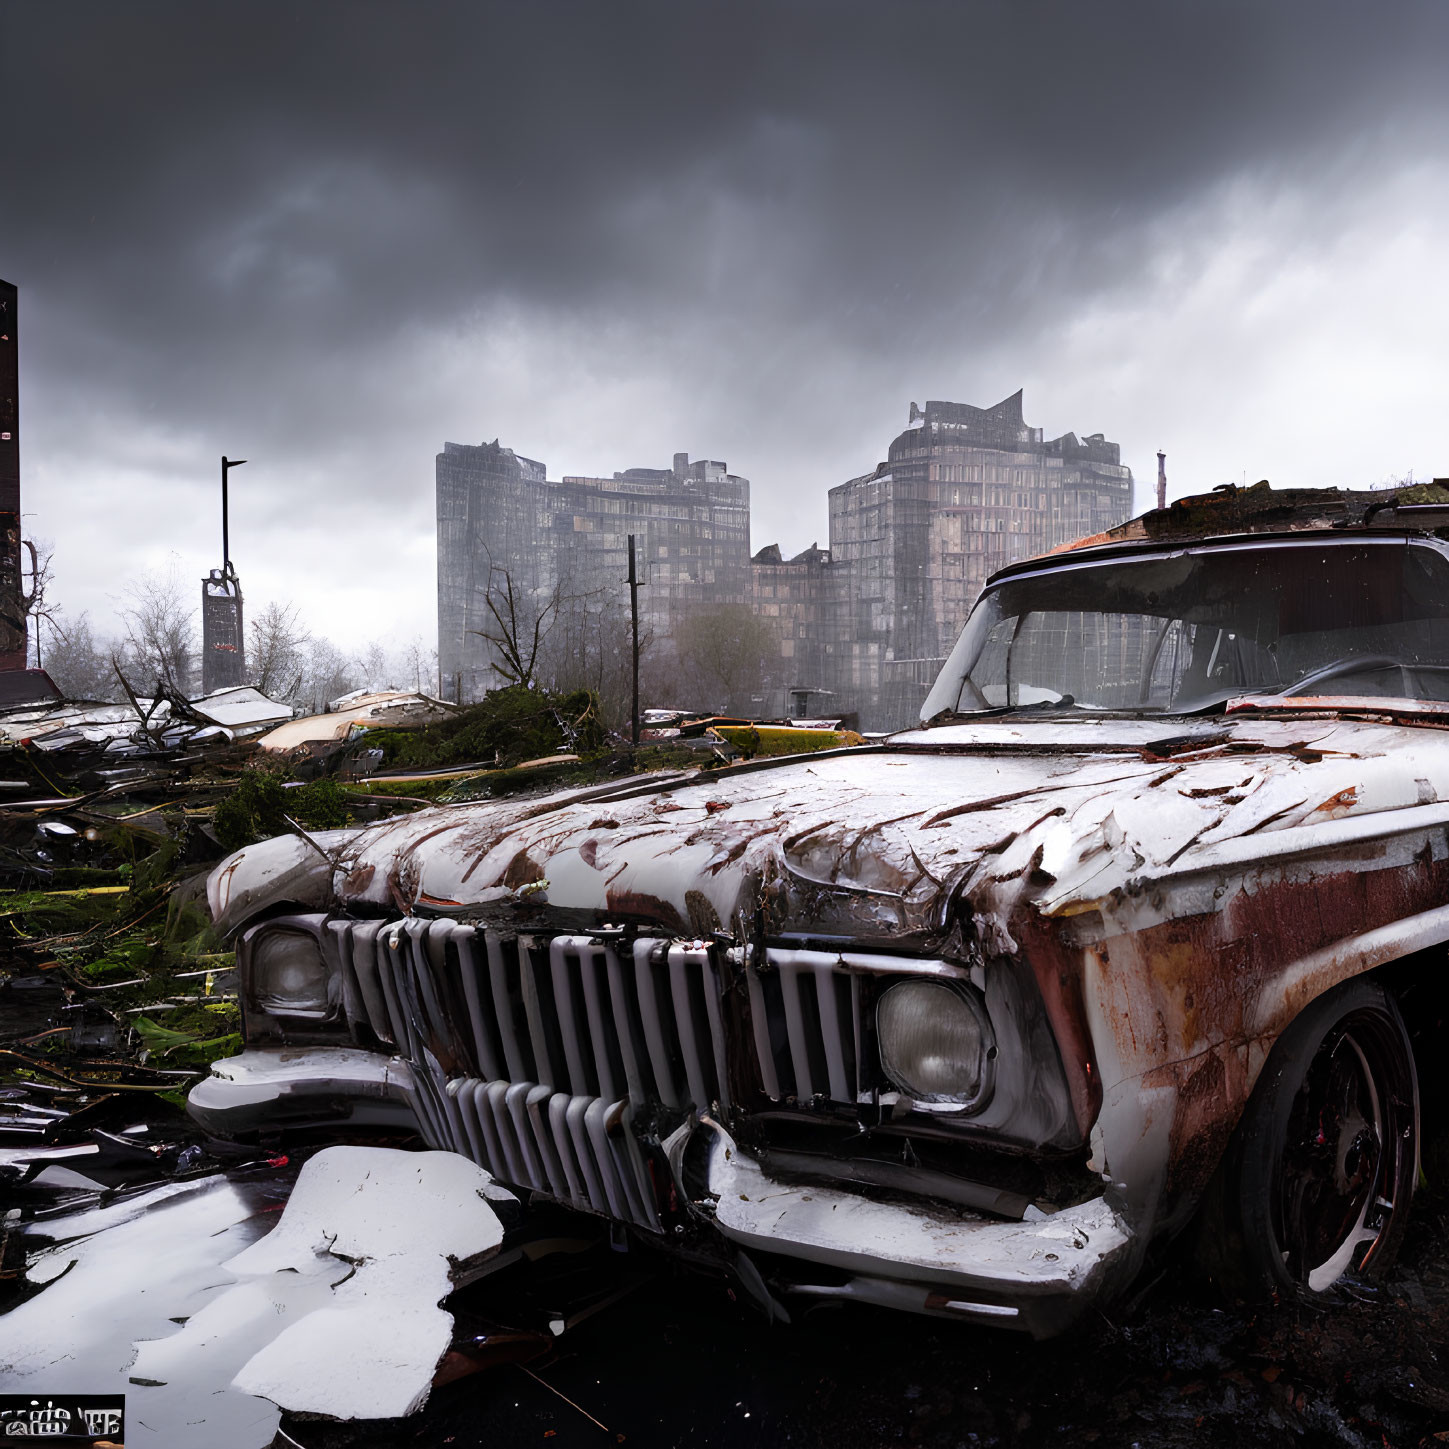 Abandoned rusty car amidst debris under stormy sky